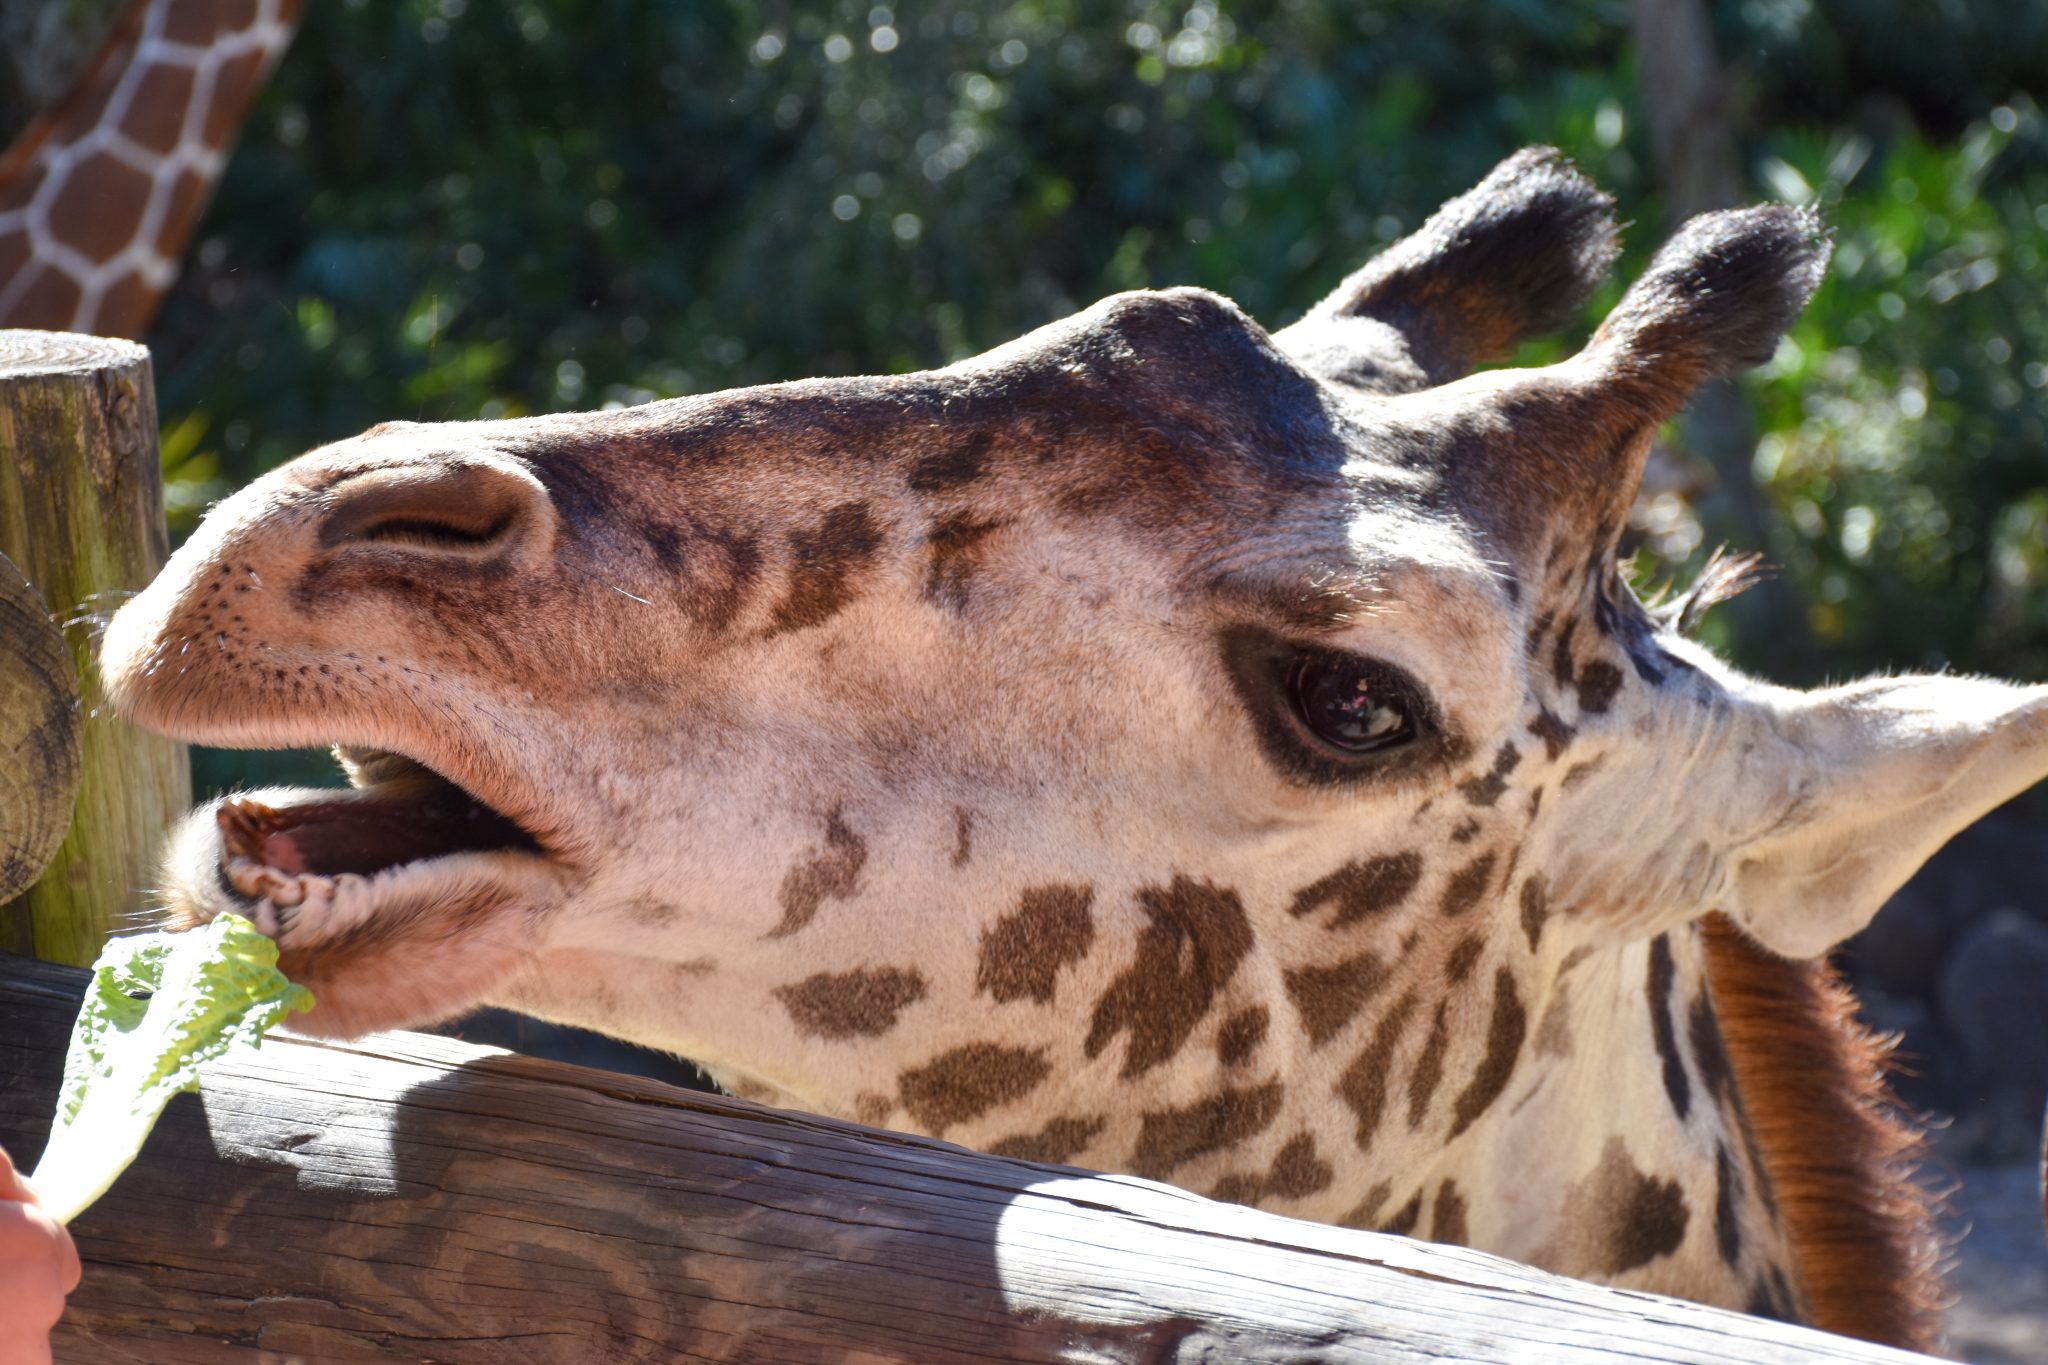 Giraffe head eating a piece of lettuce